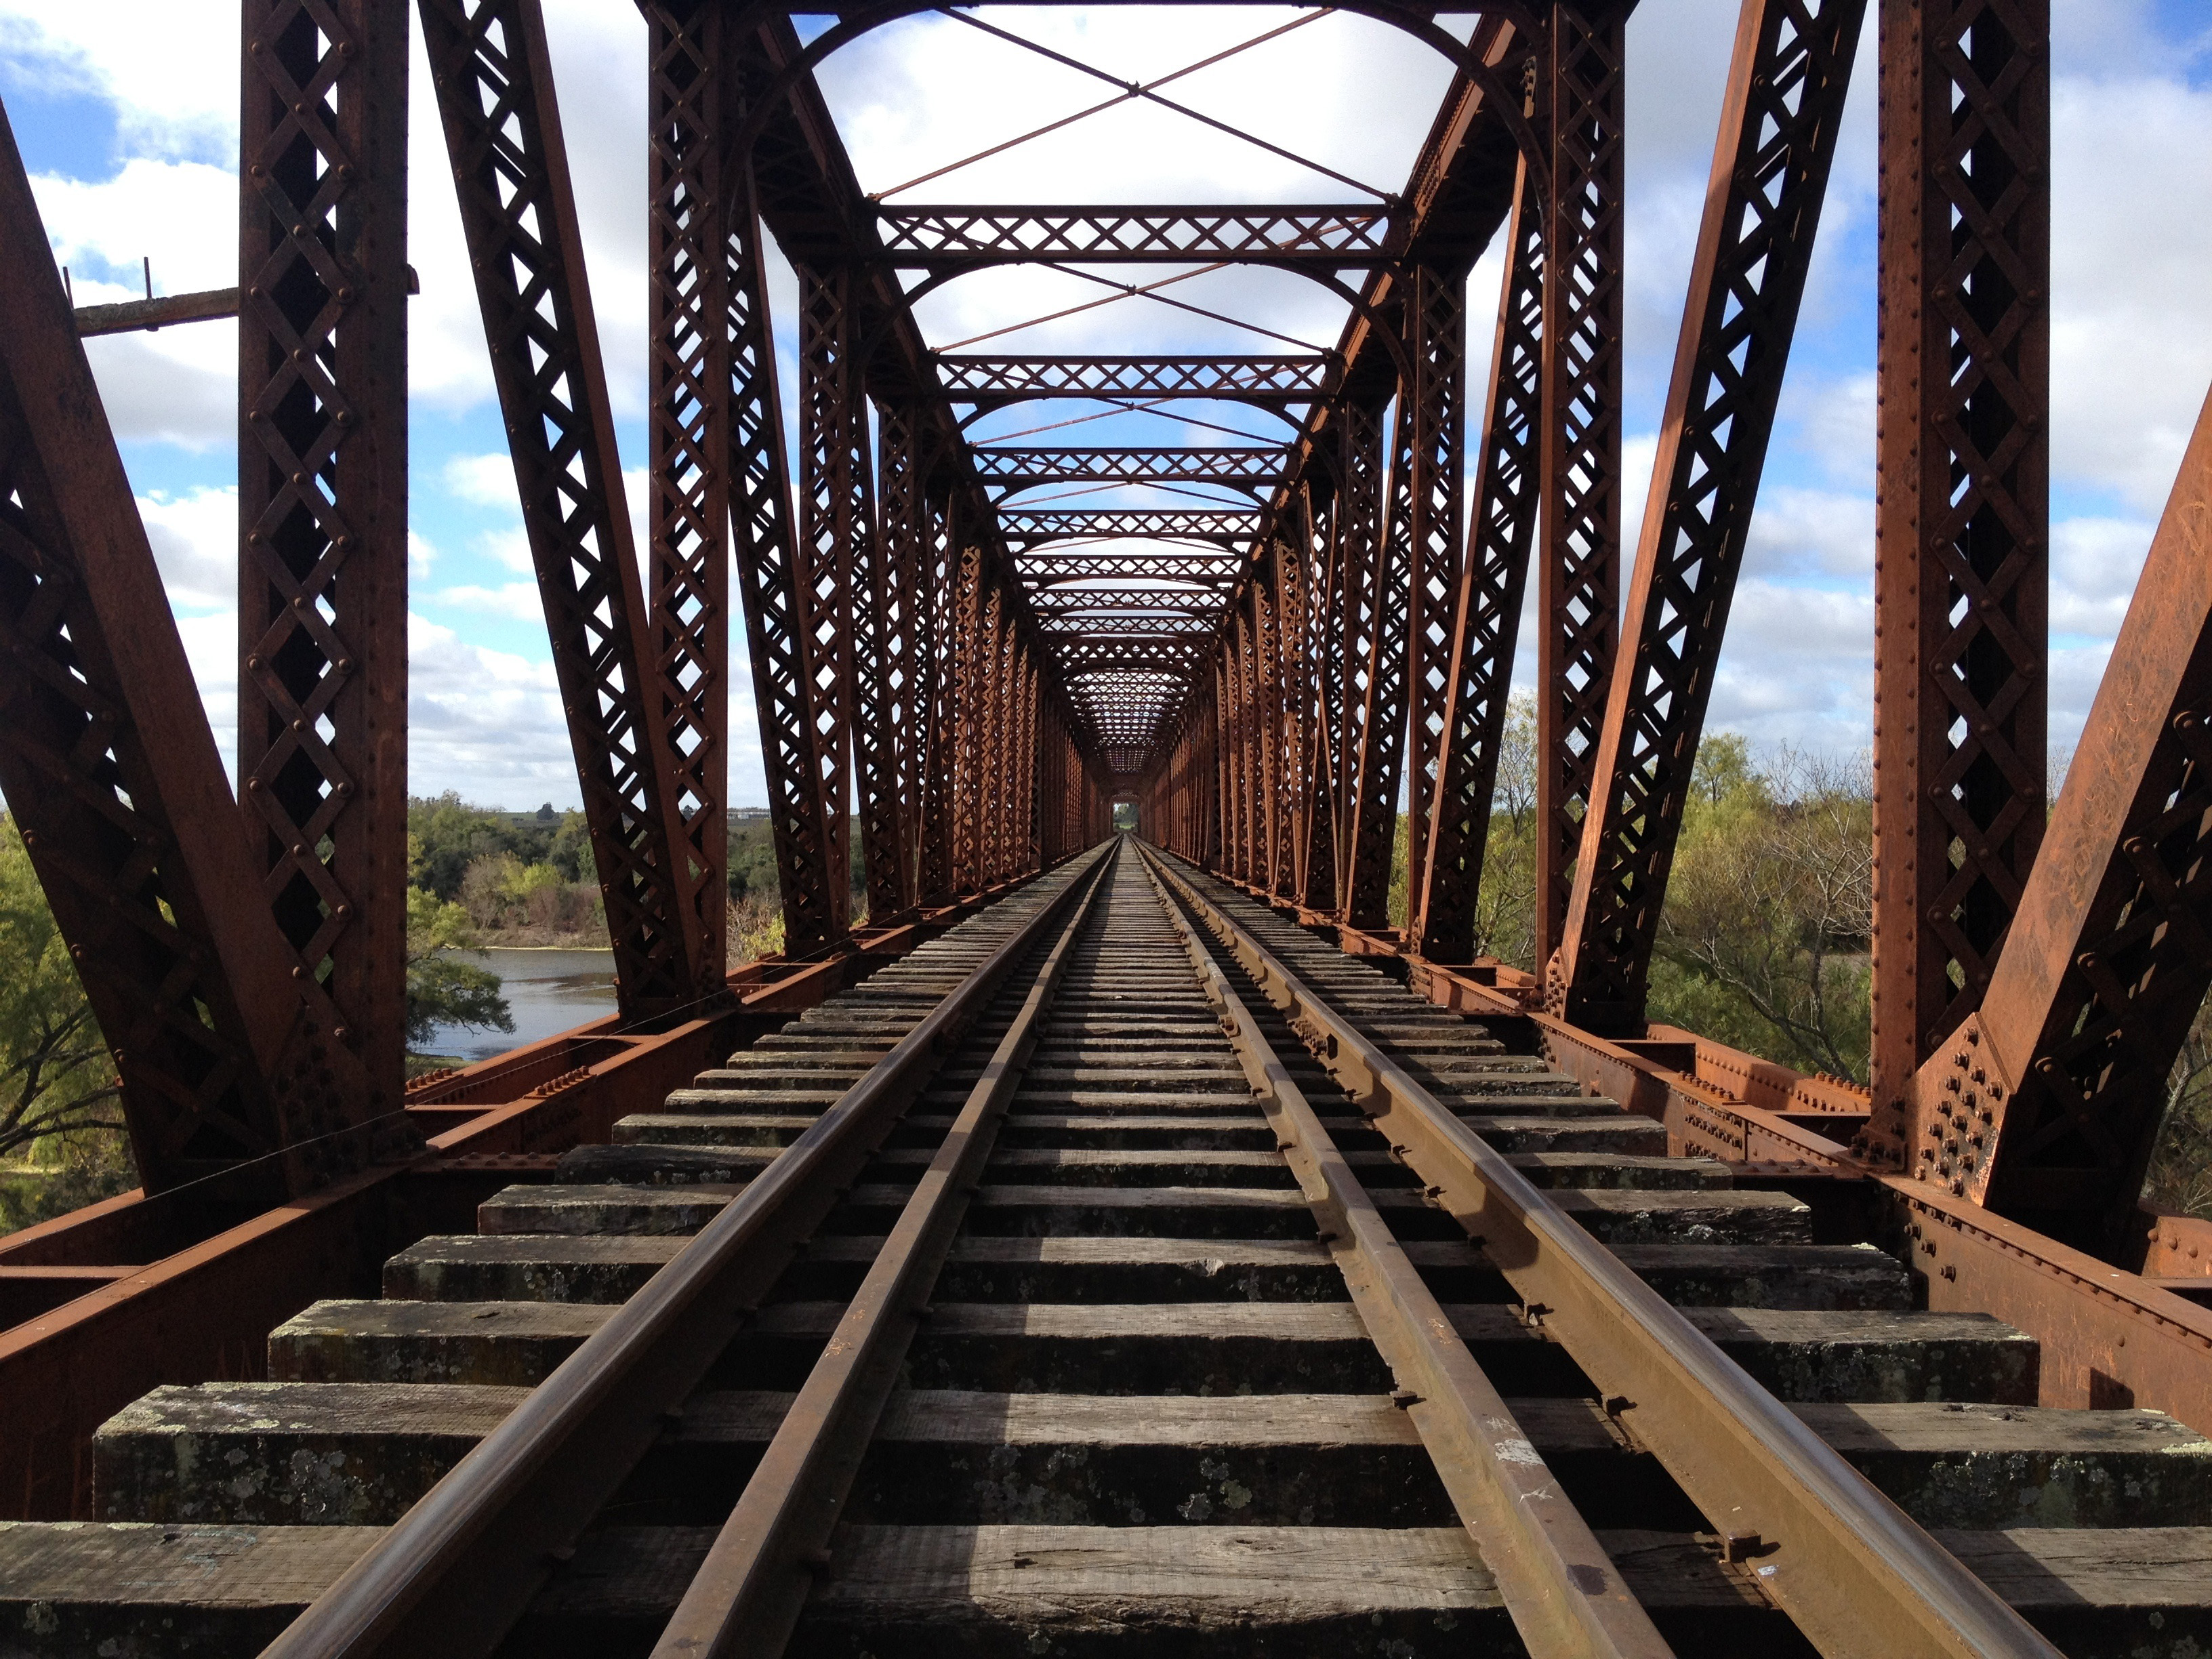 railtracks-and-bridge-in-florida.jpg